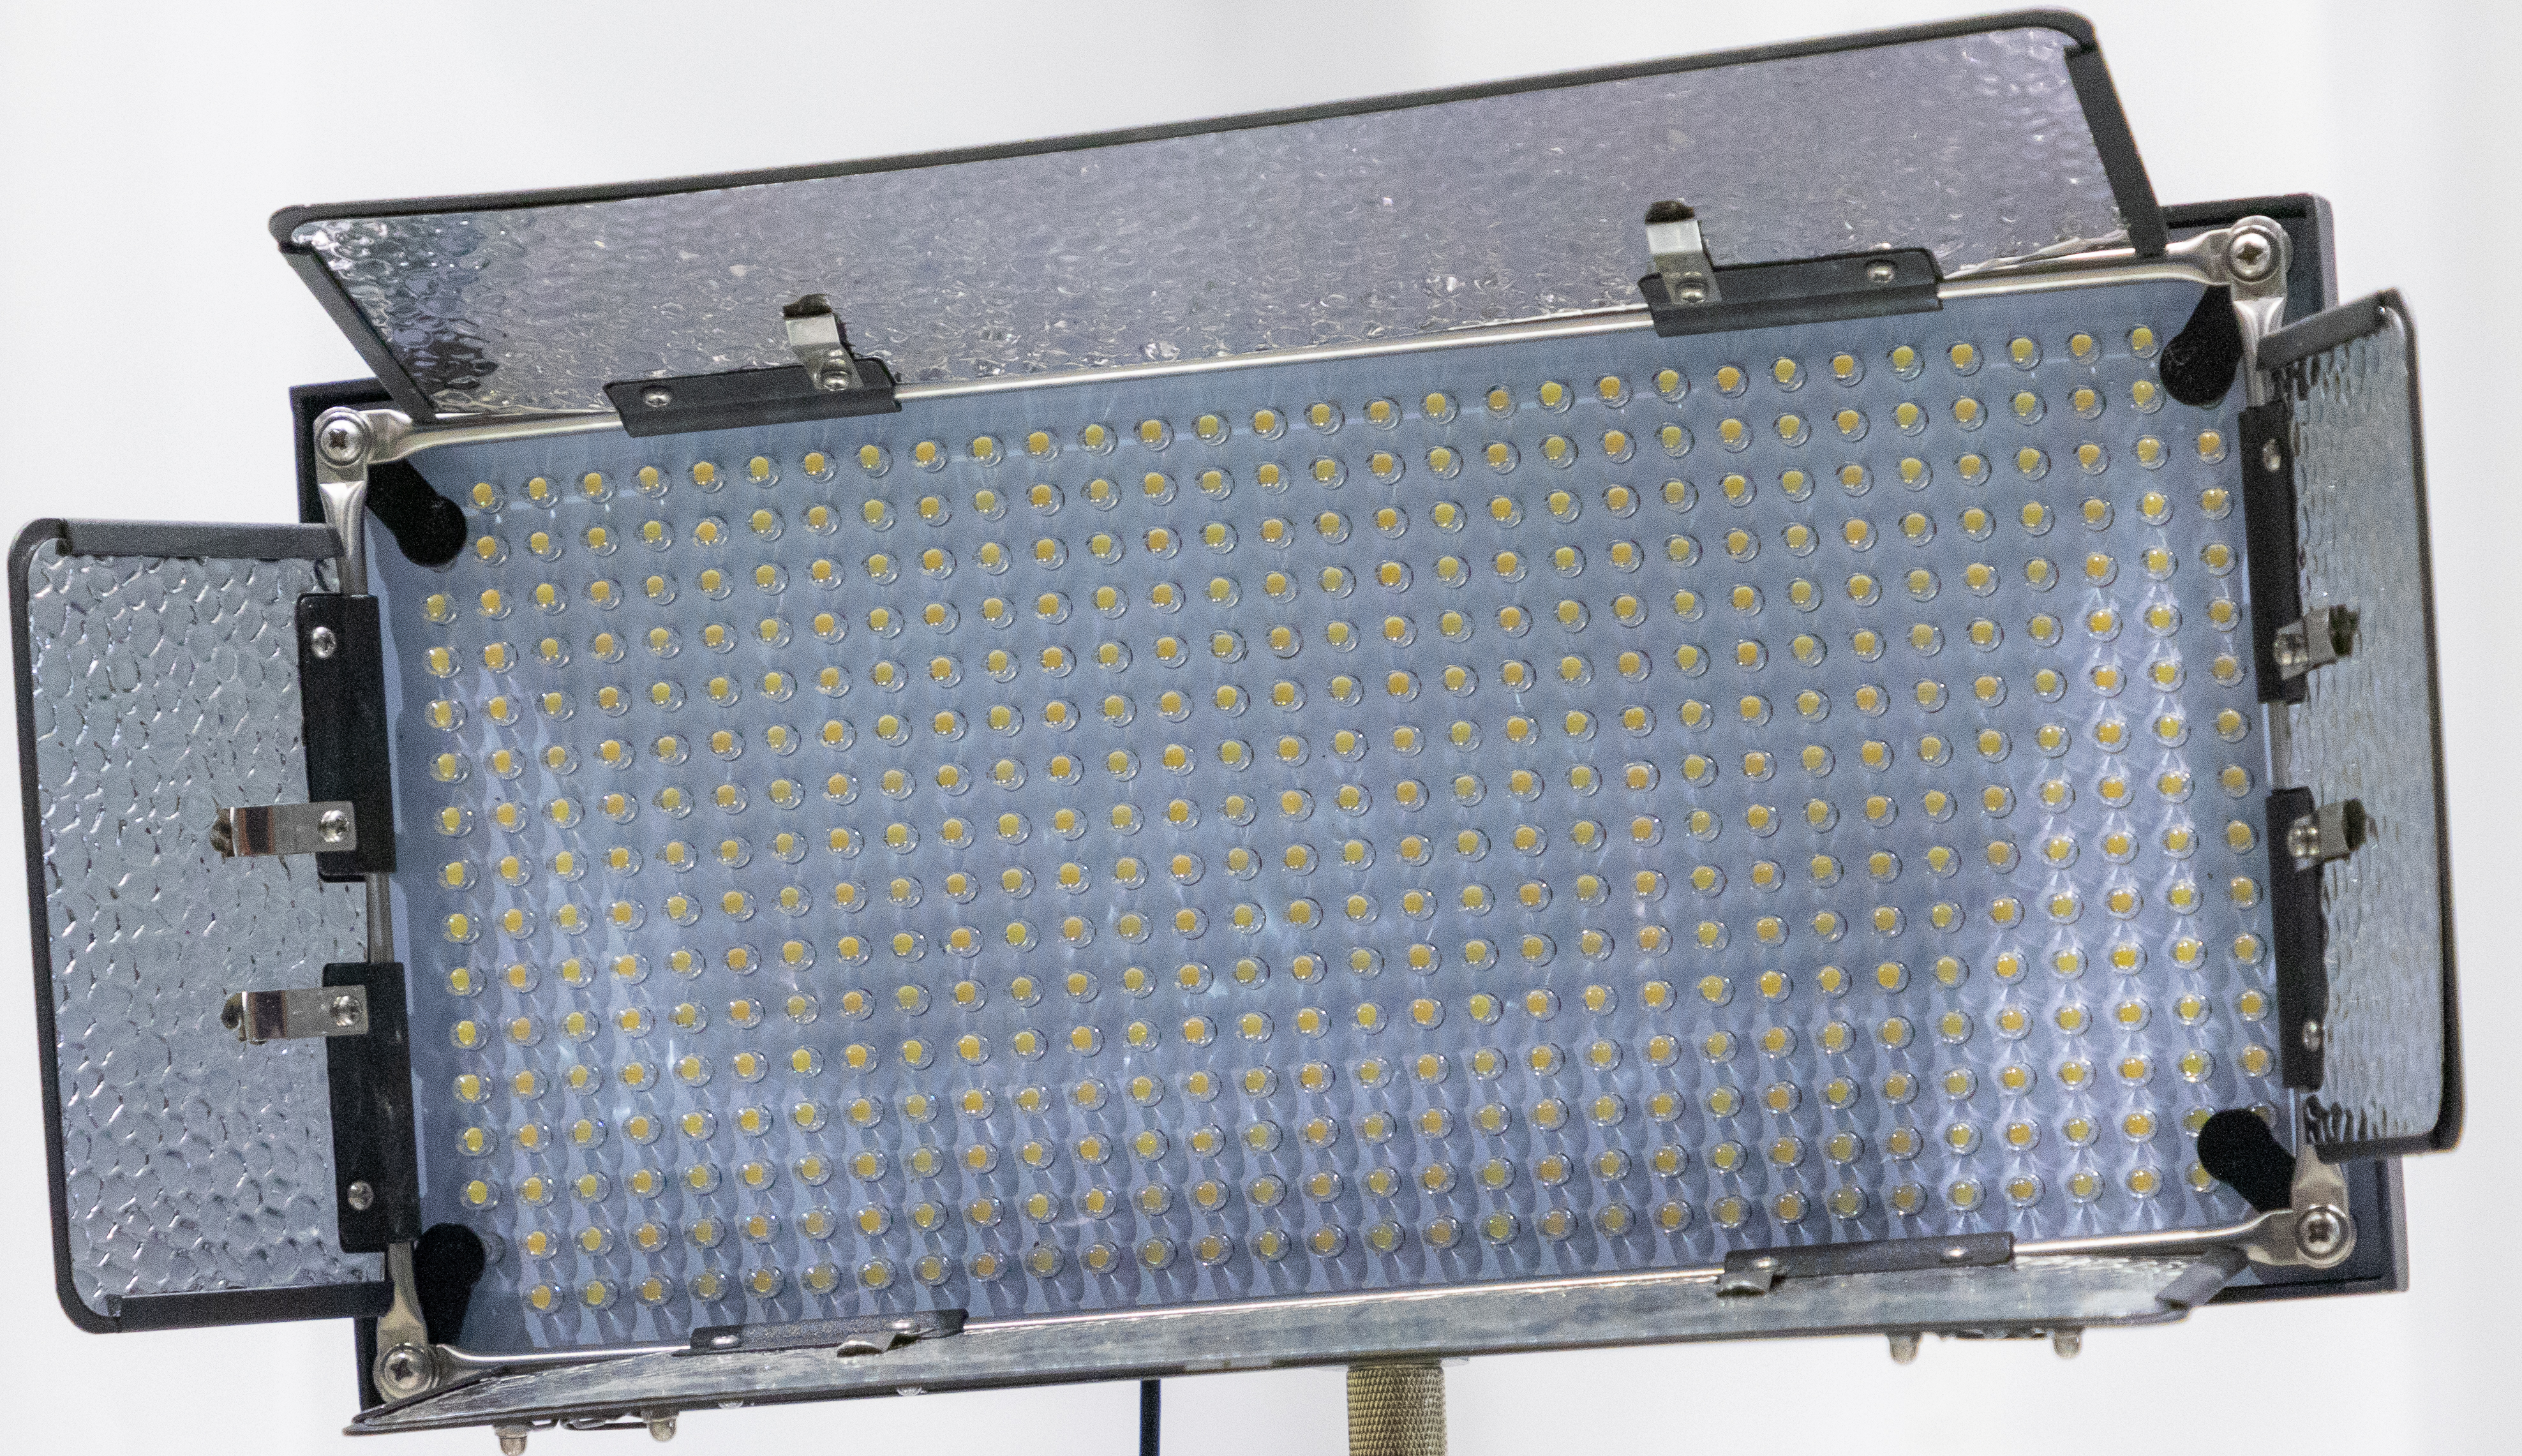 A rectangular panel light where you can see many tiny LED bulbs.